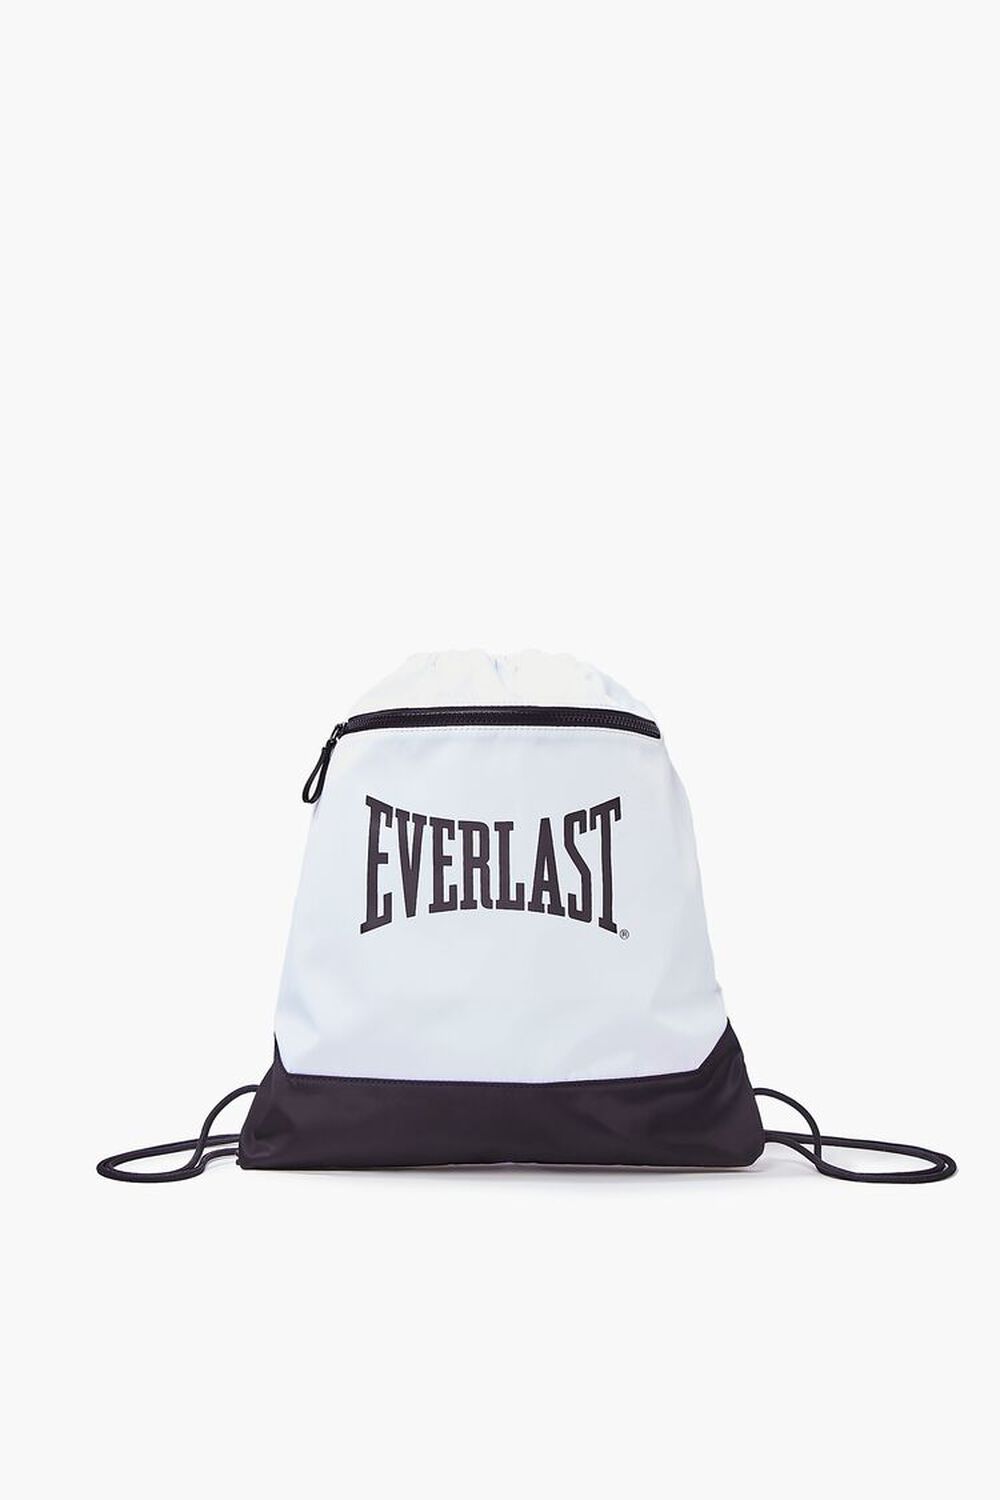 WHITE Everlast Graphic Drawstring Backpack, image 1